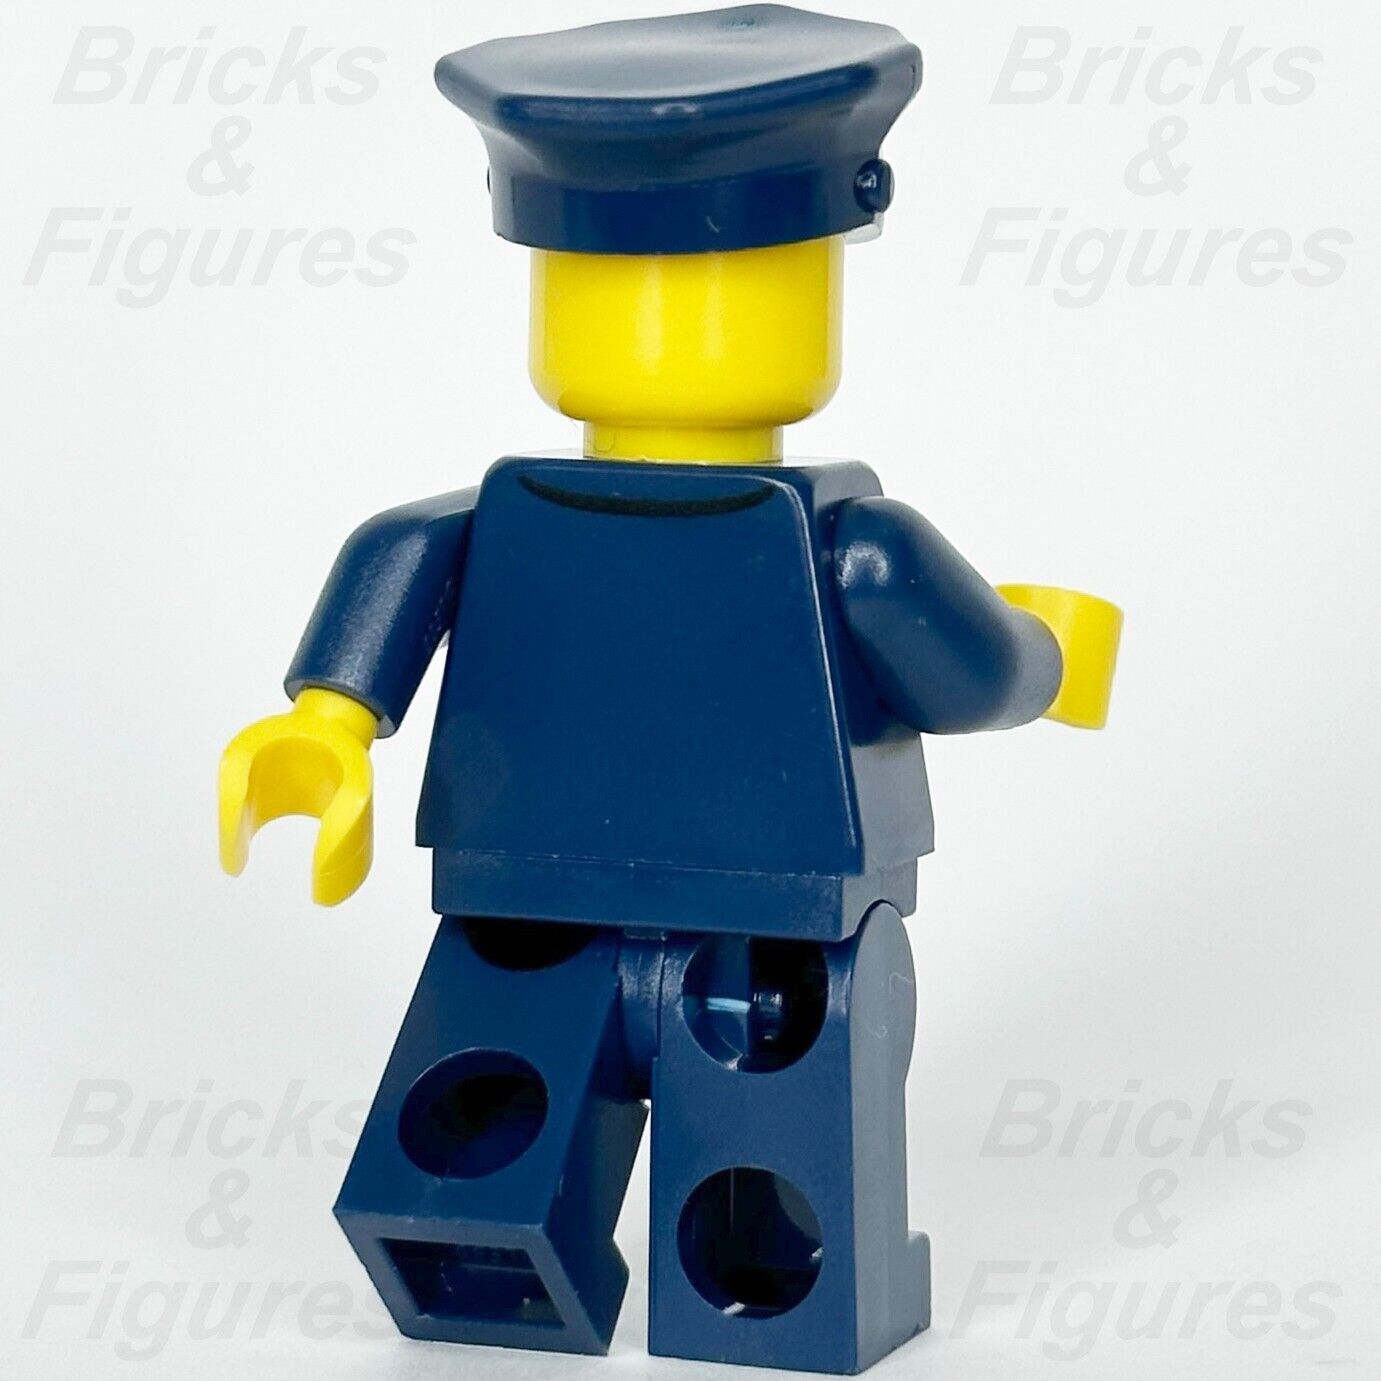 LEGO Police Officer 1940s Era Minifigure Smirk Creator Expert Town 10278 twn405 3